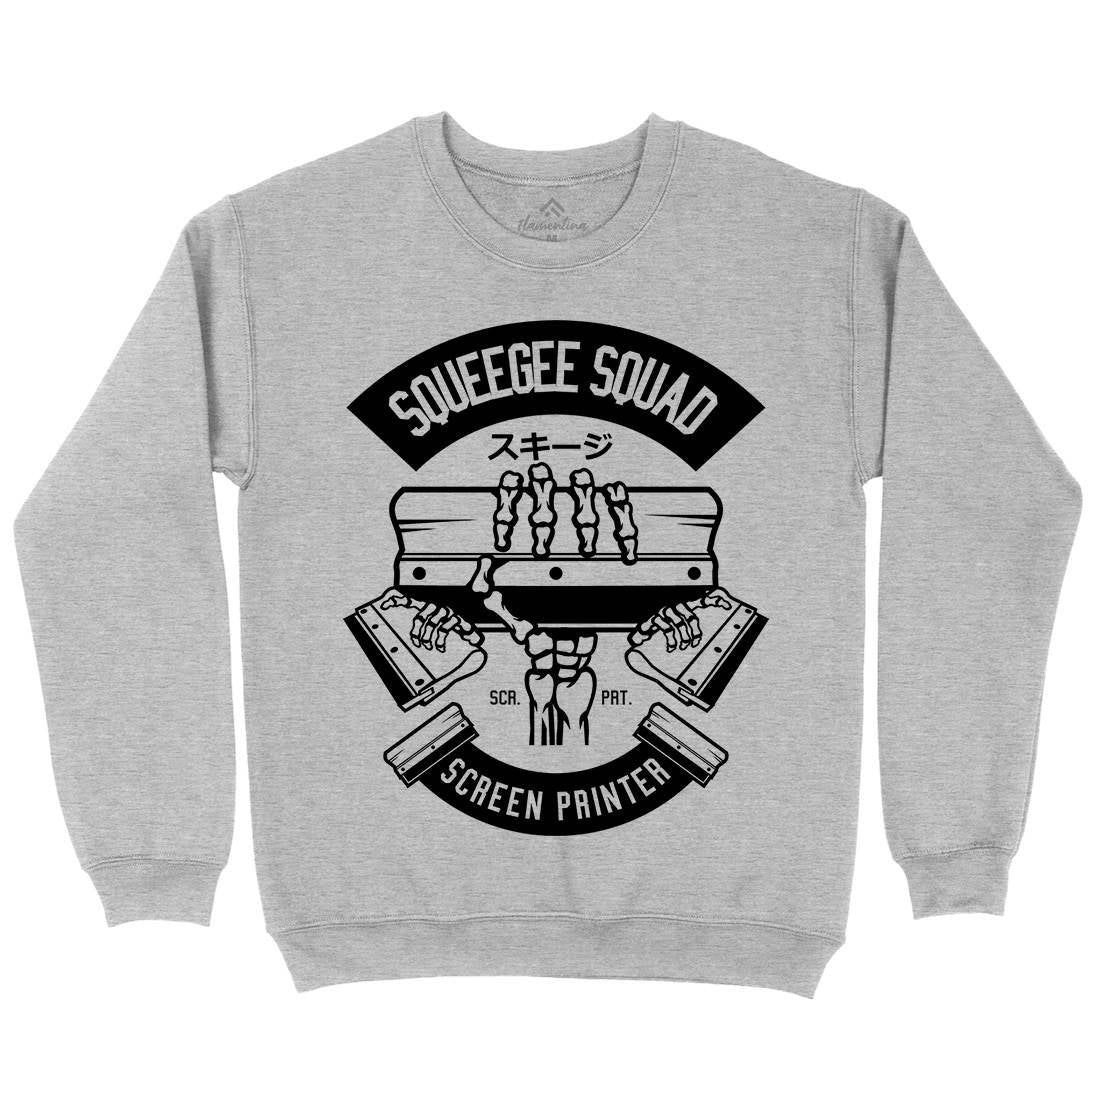 Squeegee Squad Mens Crew Neck Sweatshirt Retro B642